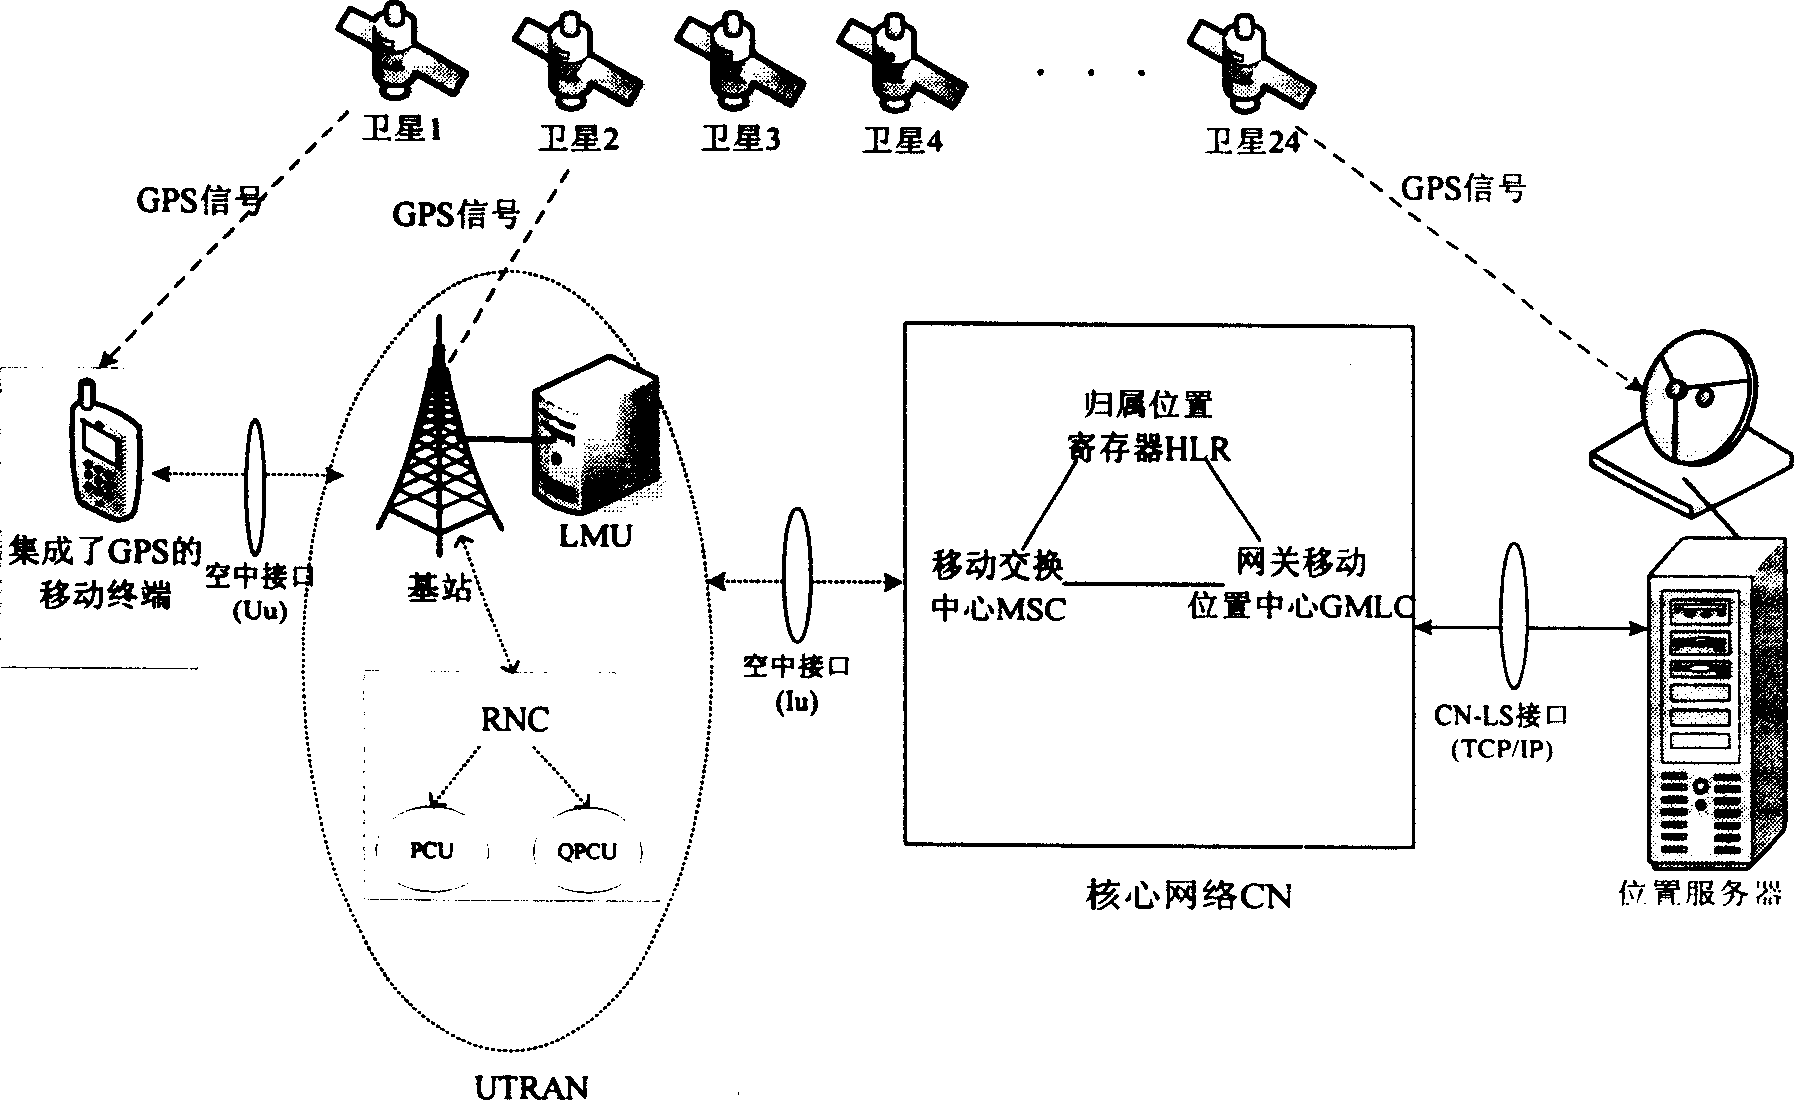 Method for positioning RTK based on TD-SCDMA